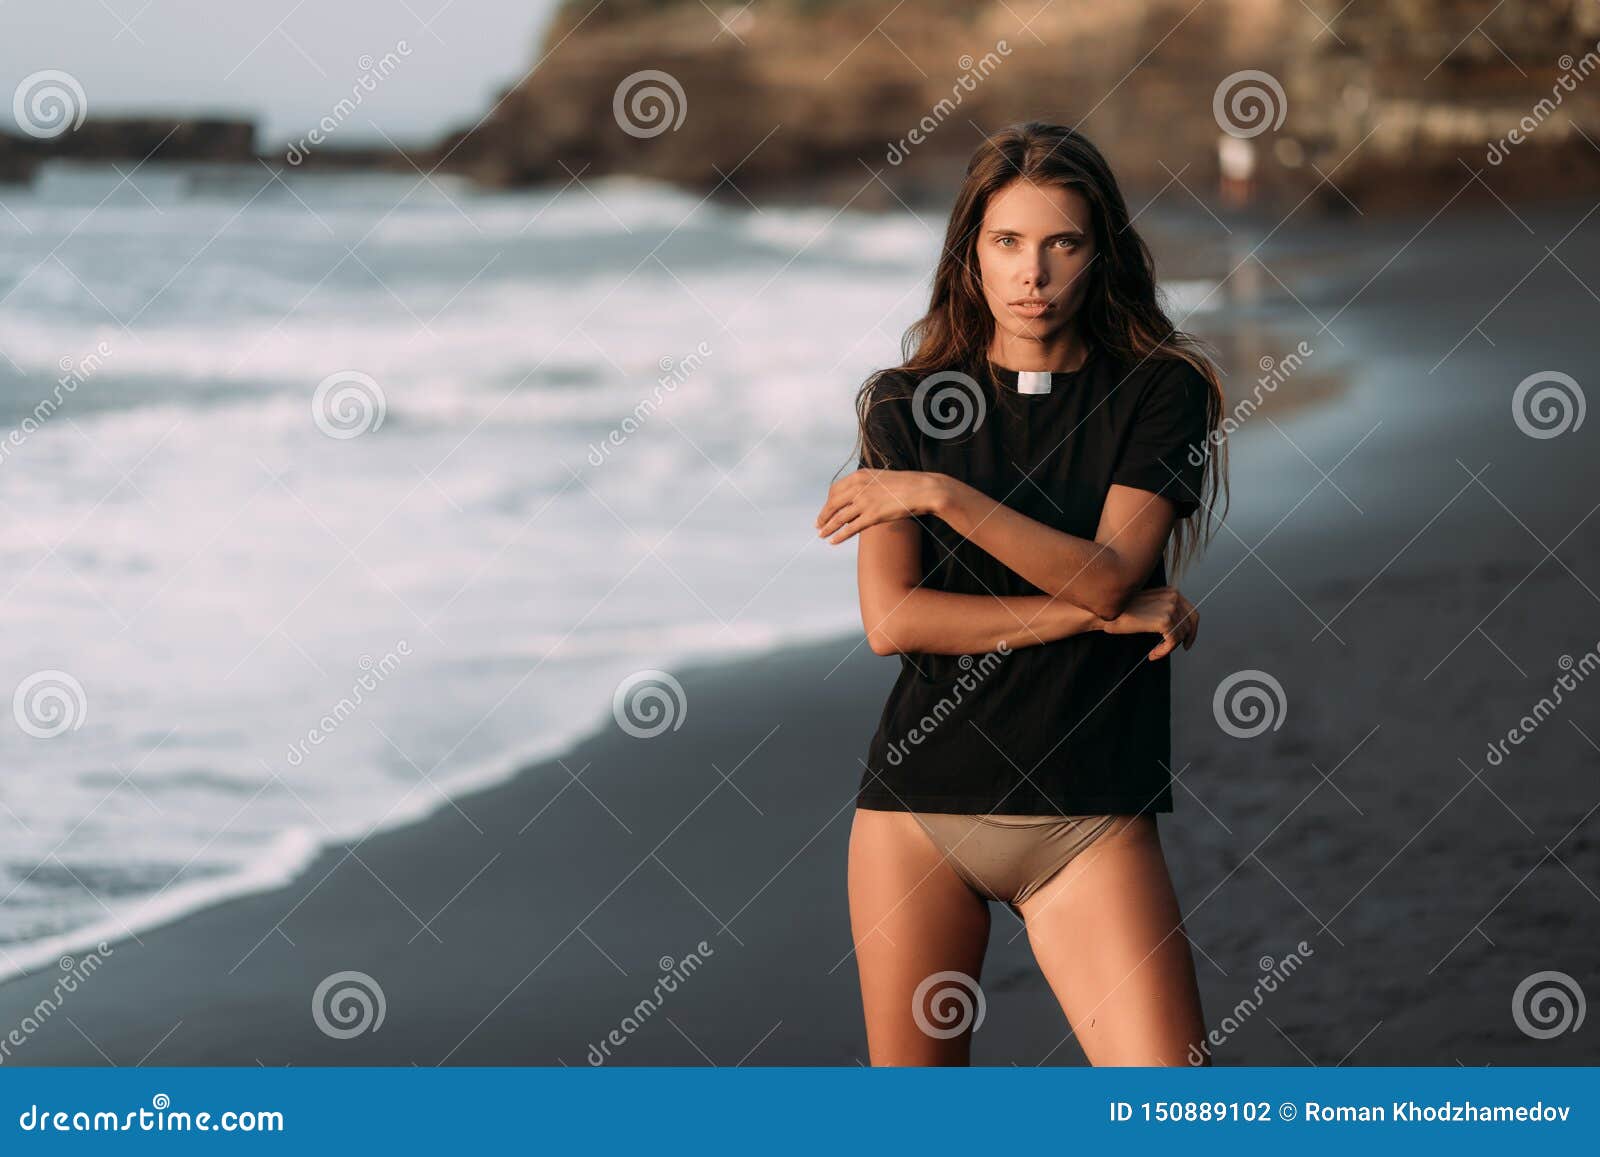 Woman Wearing Bikini Pants And Wet T-shirt Standing On The Beach